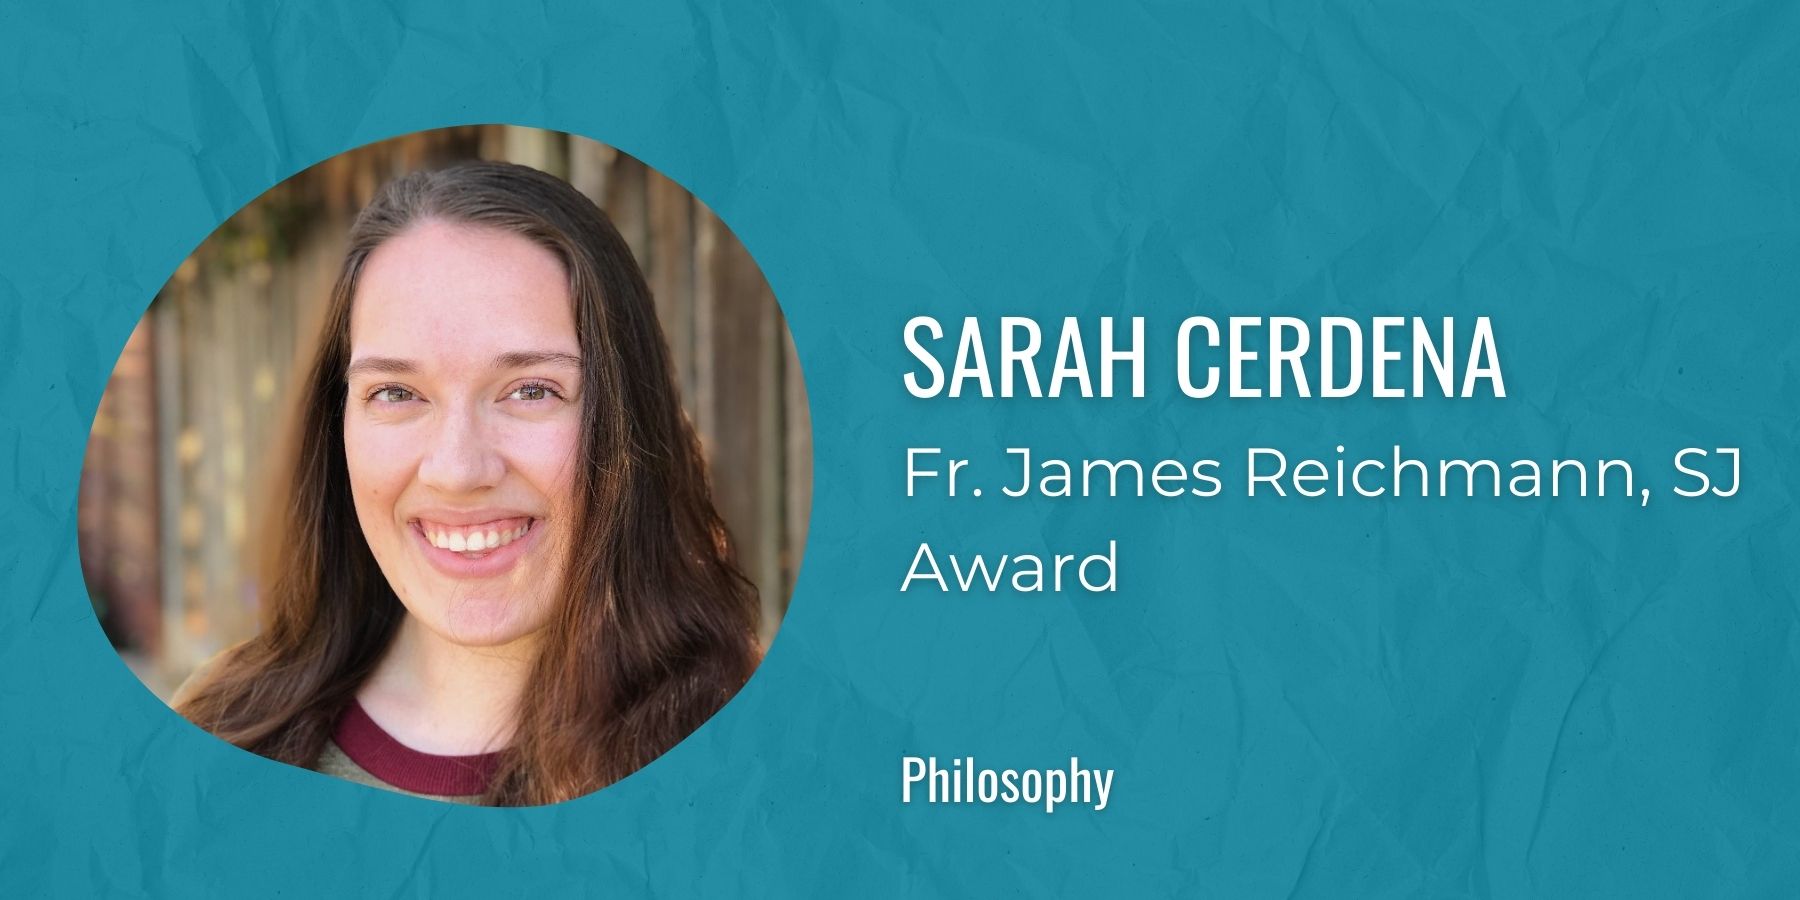 Image of Sarah Cerdena with text: Fr. James Reichmann, SJ Award, Philosophy
